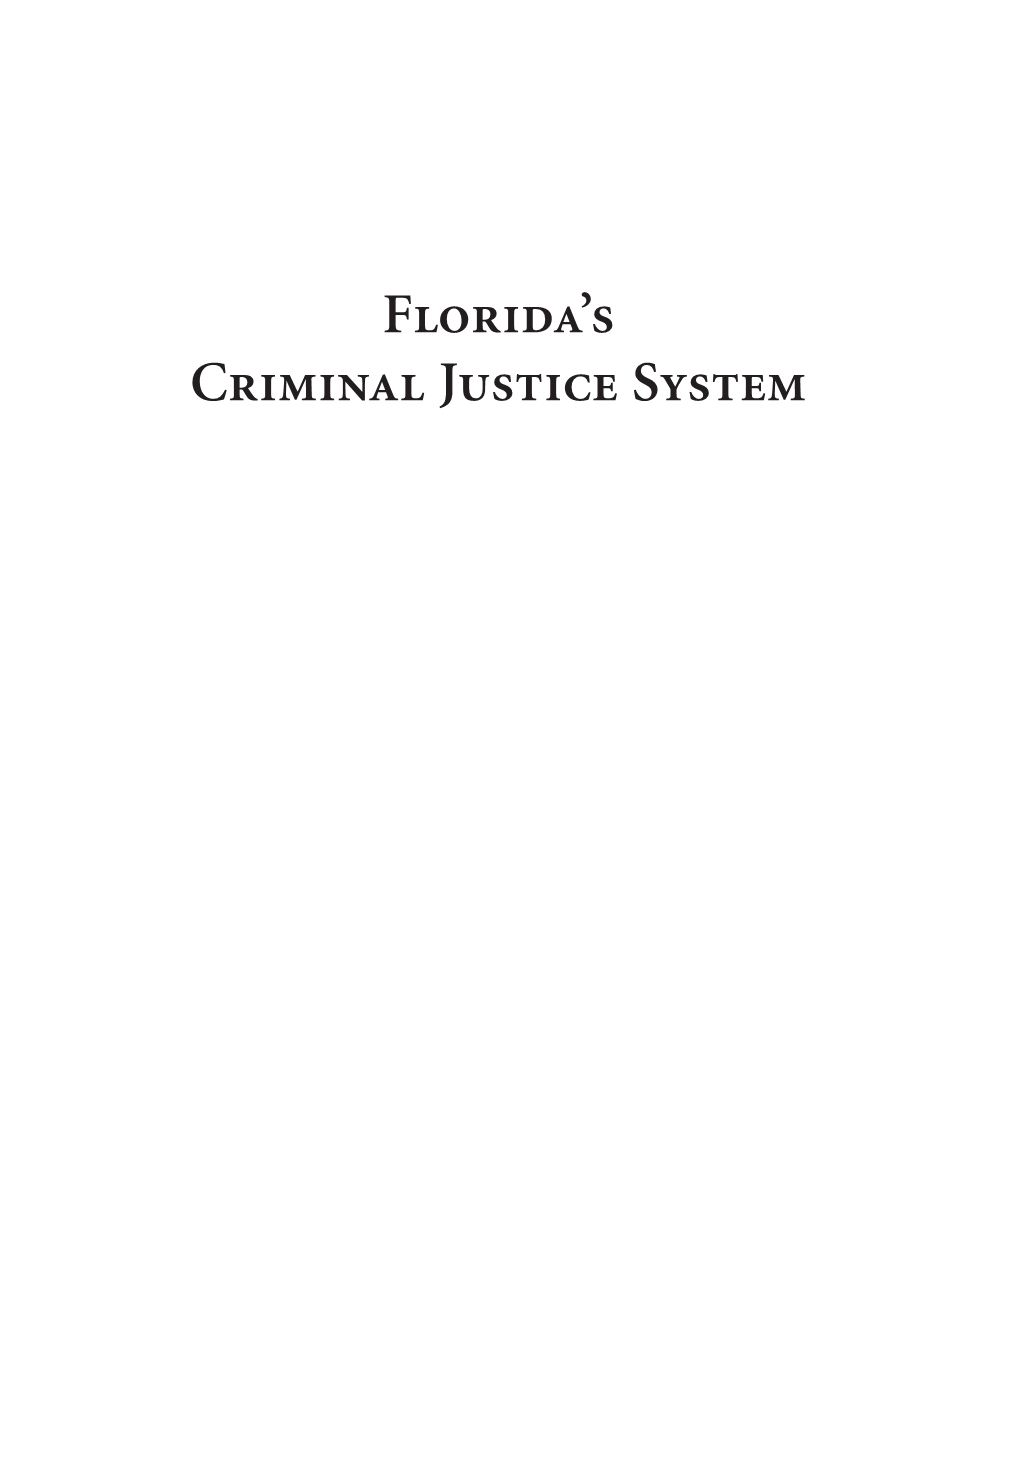 Florida's Criminal Justice System / William G